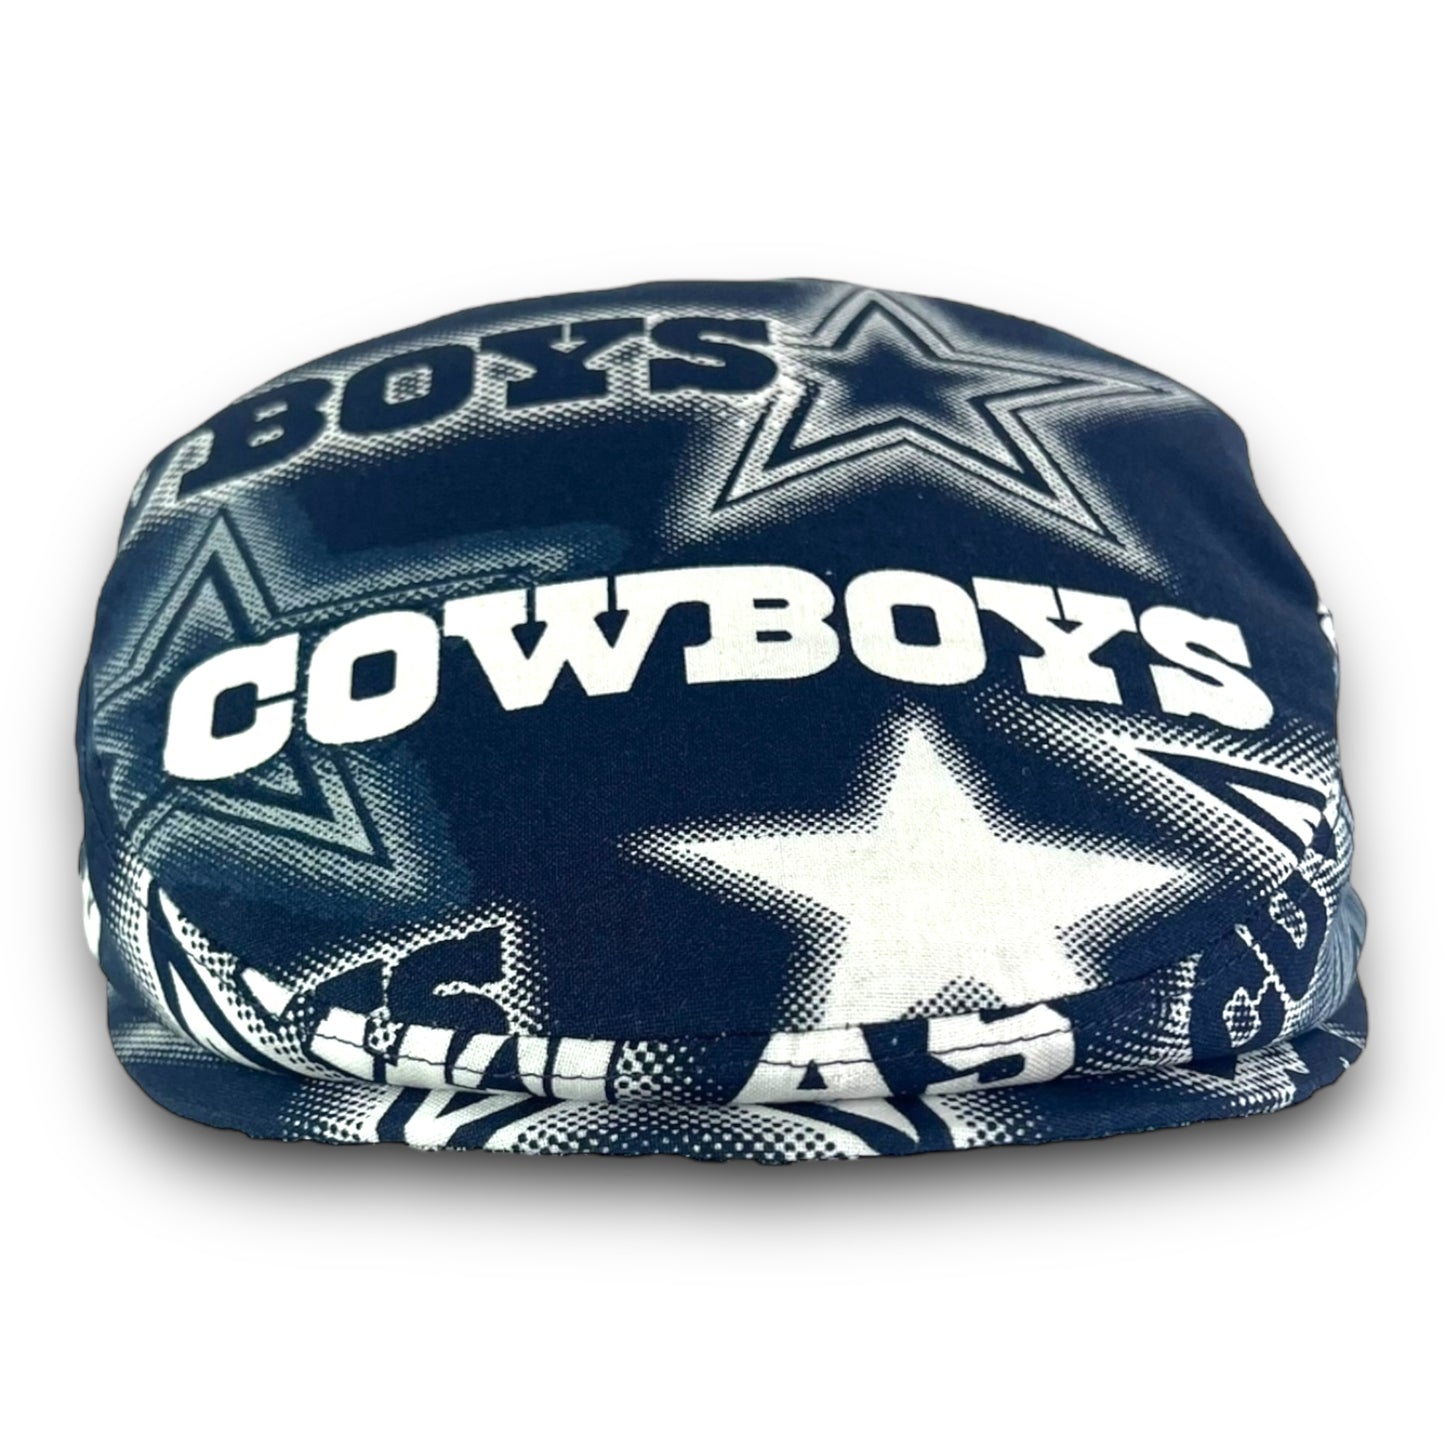 Custom Made Jeff Cap Handmade in Dallas Cowboys Dot Print Fabric